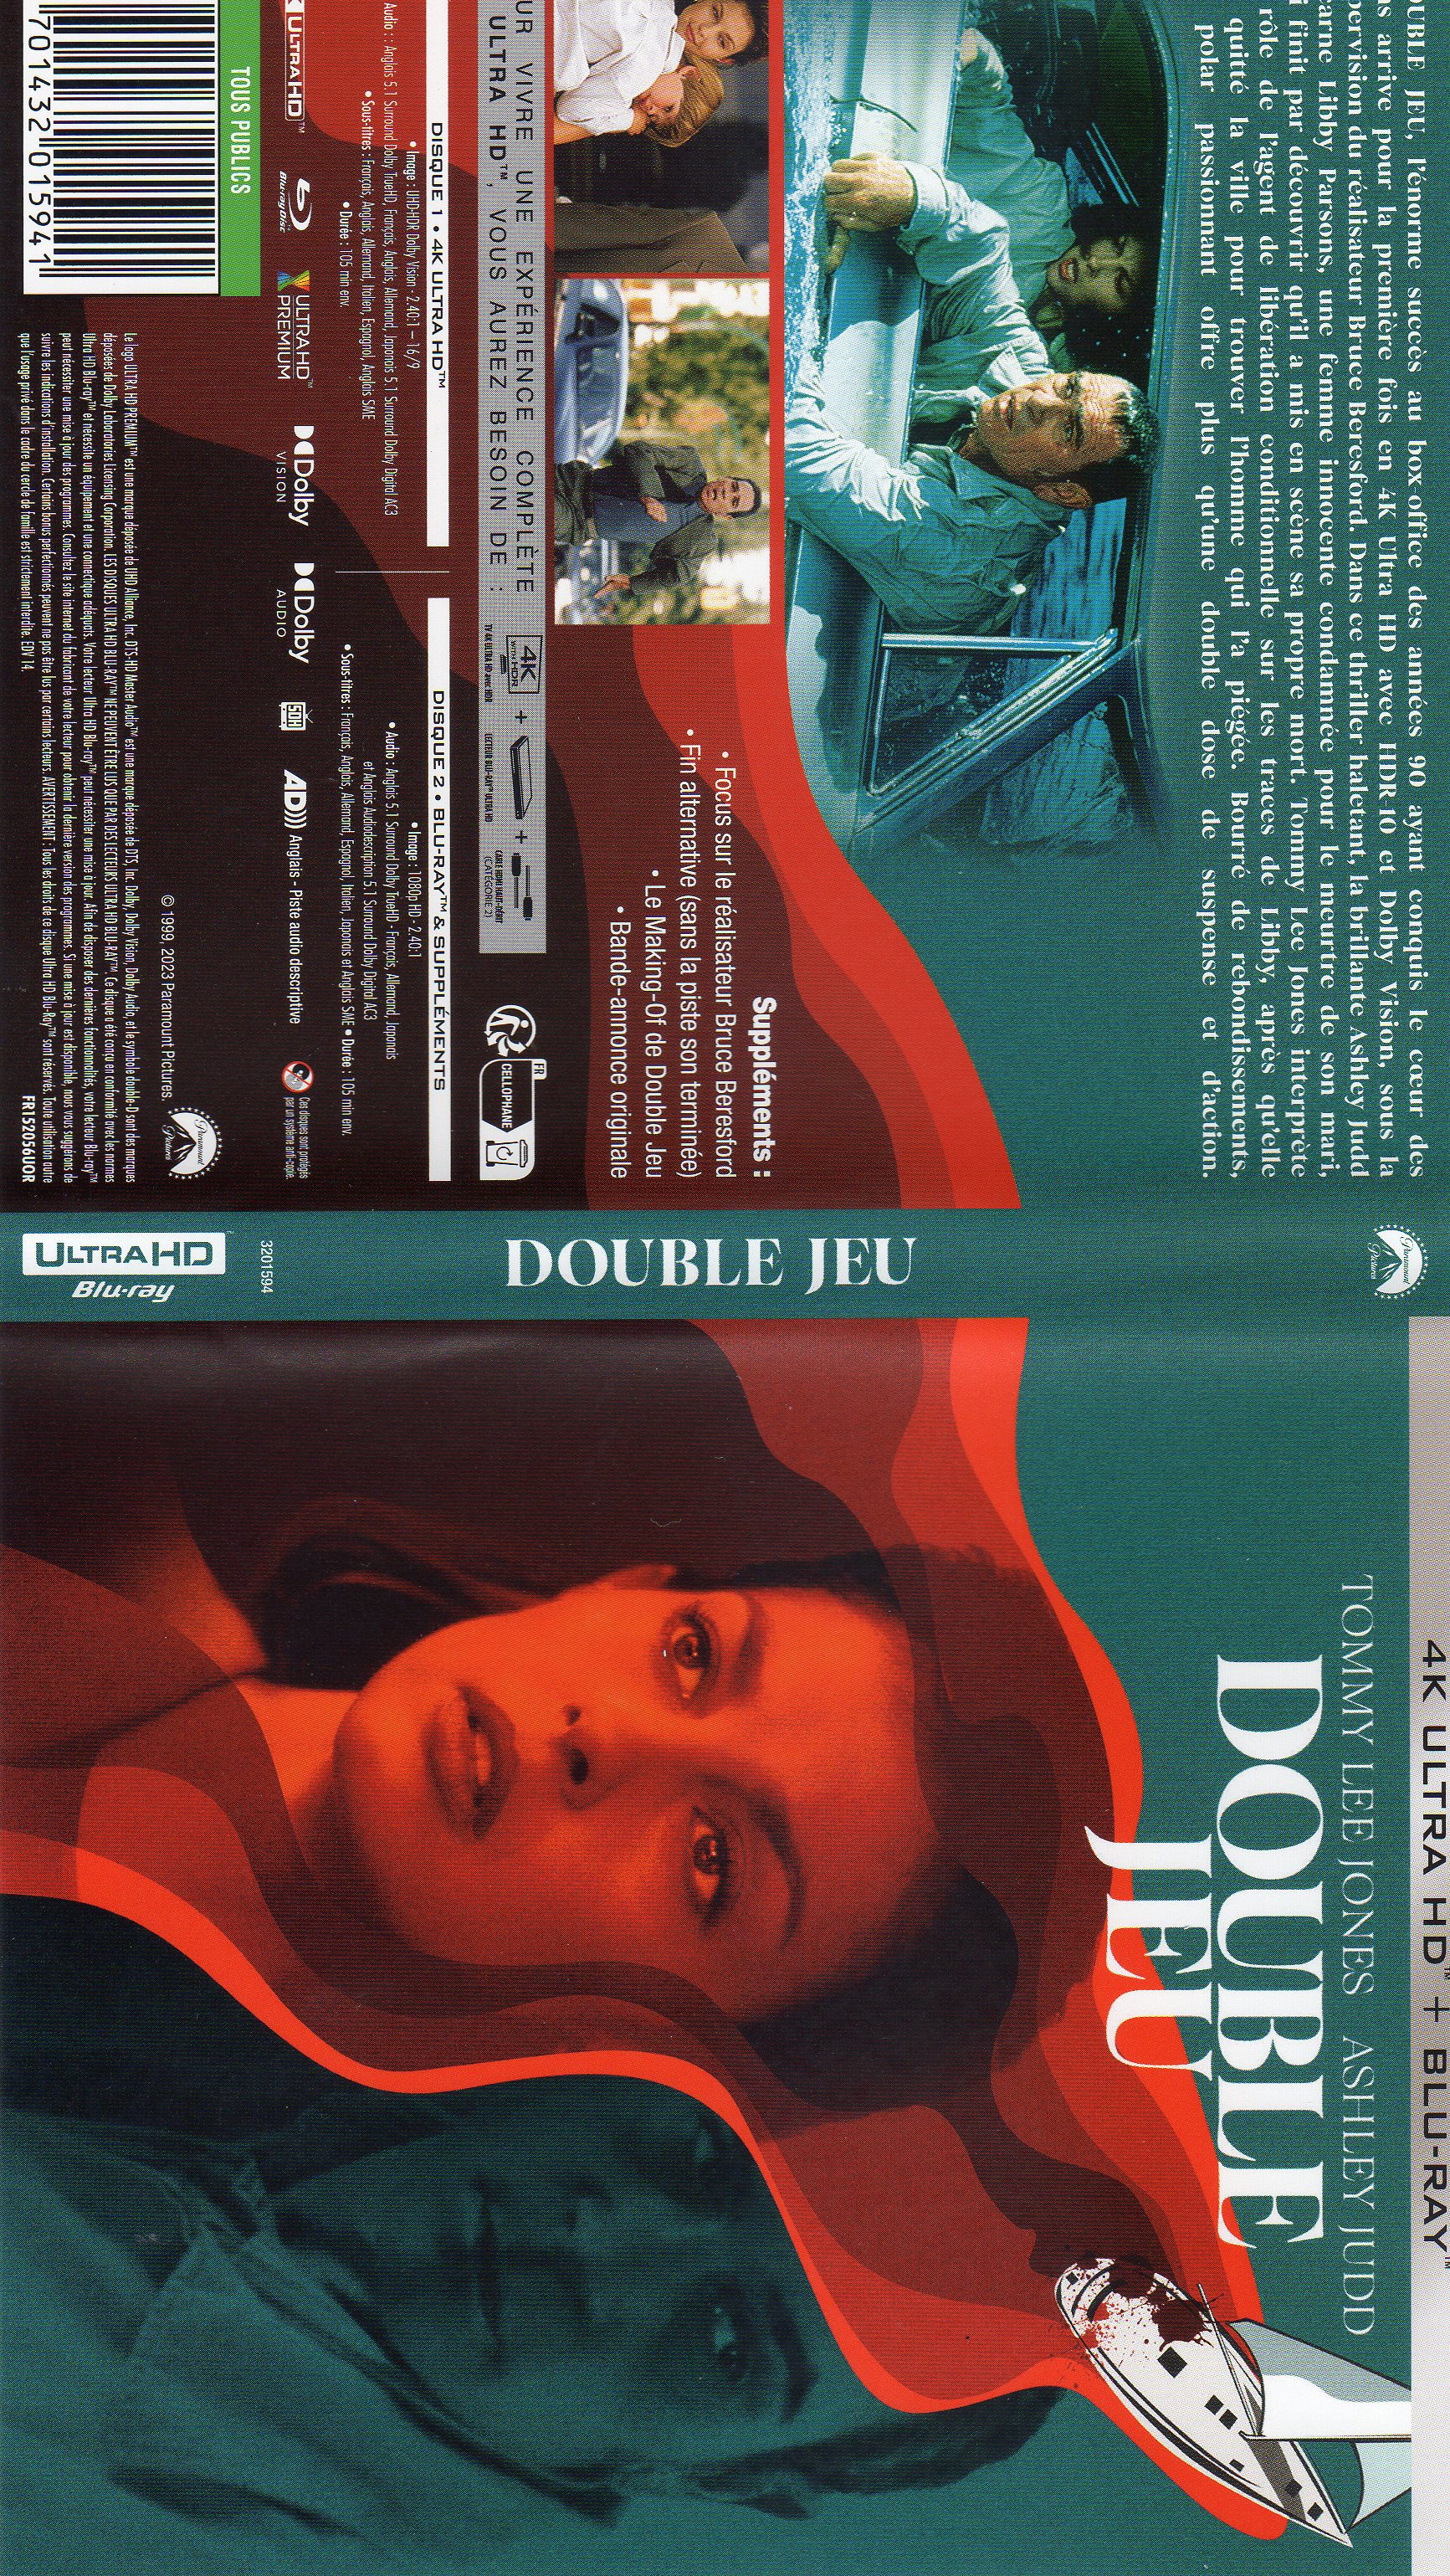 Jaquette DVD Double jeu (BLU-RAY)